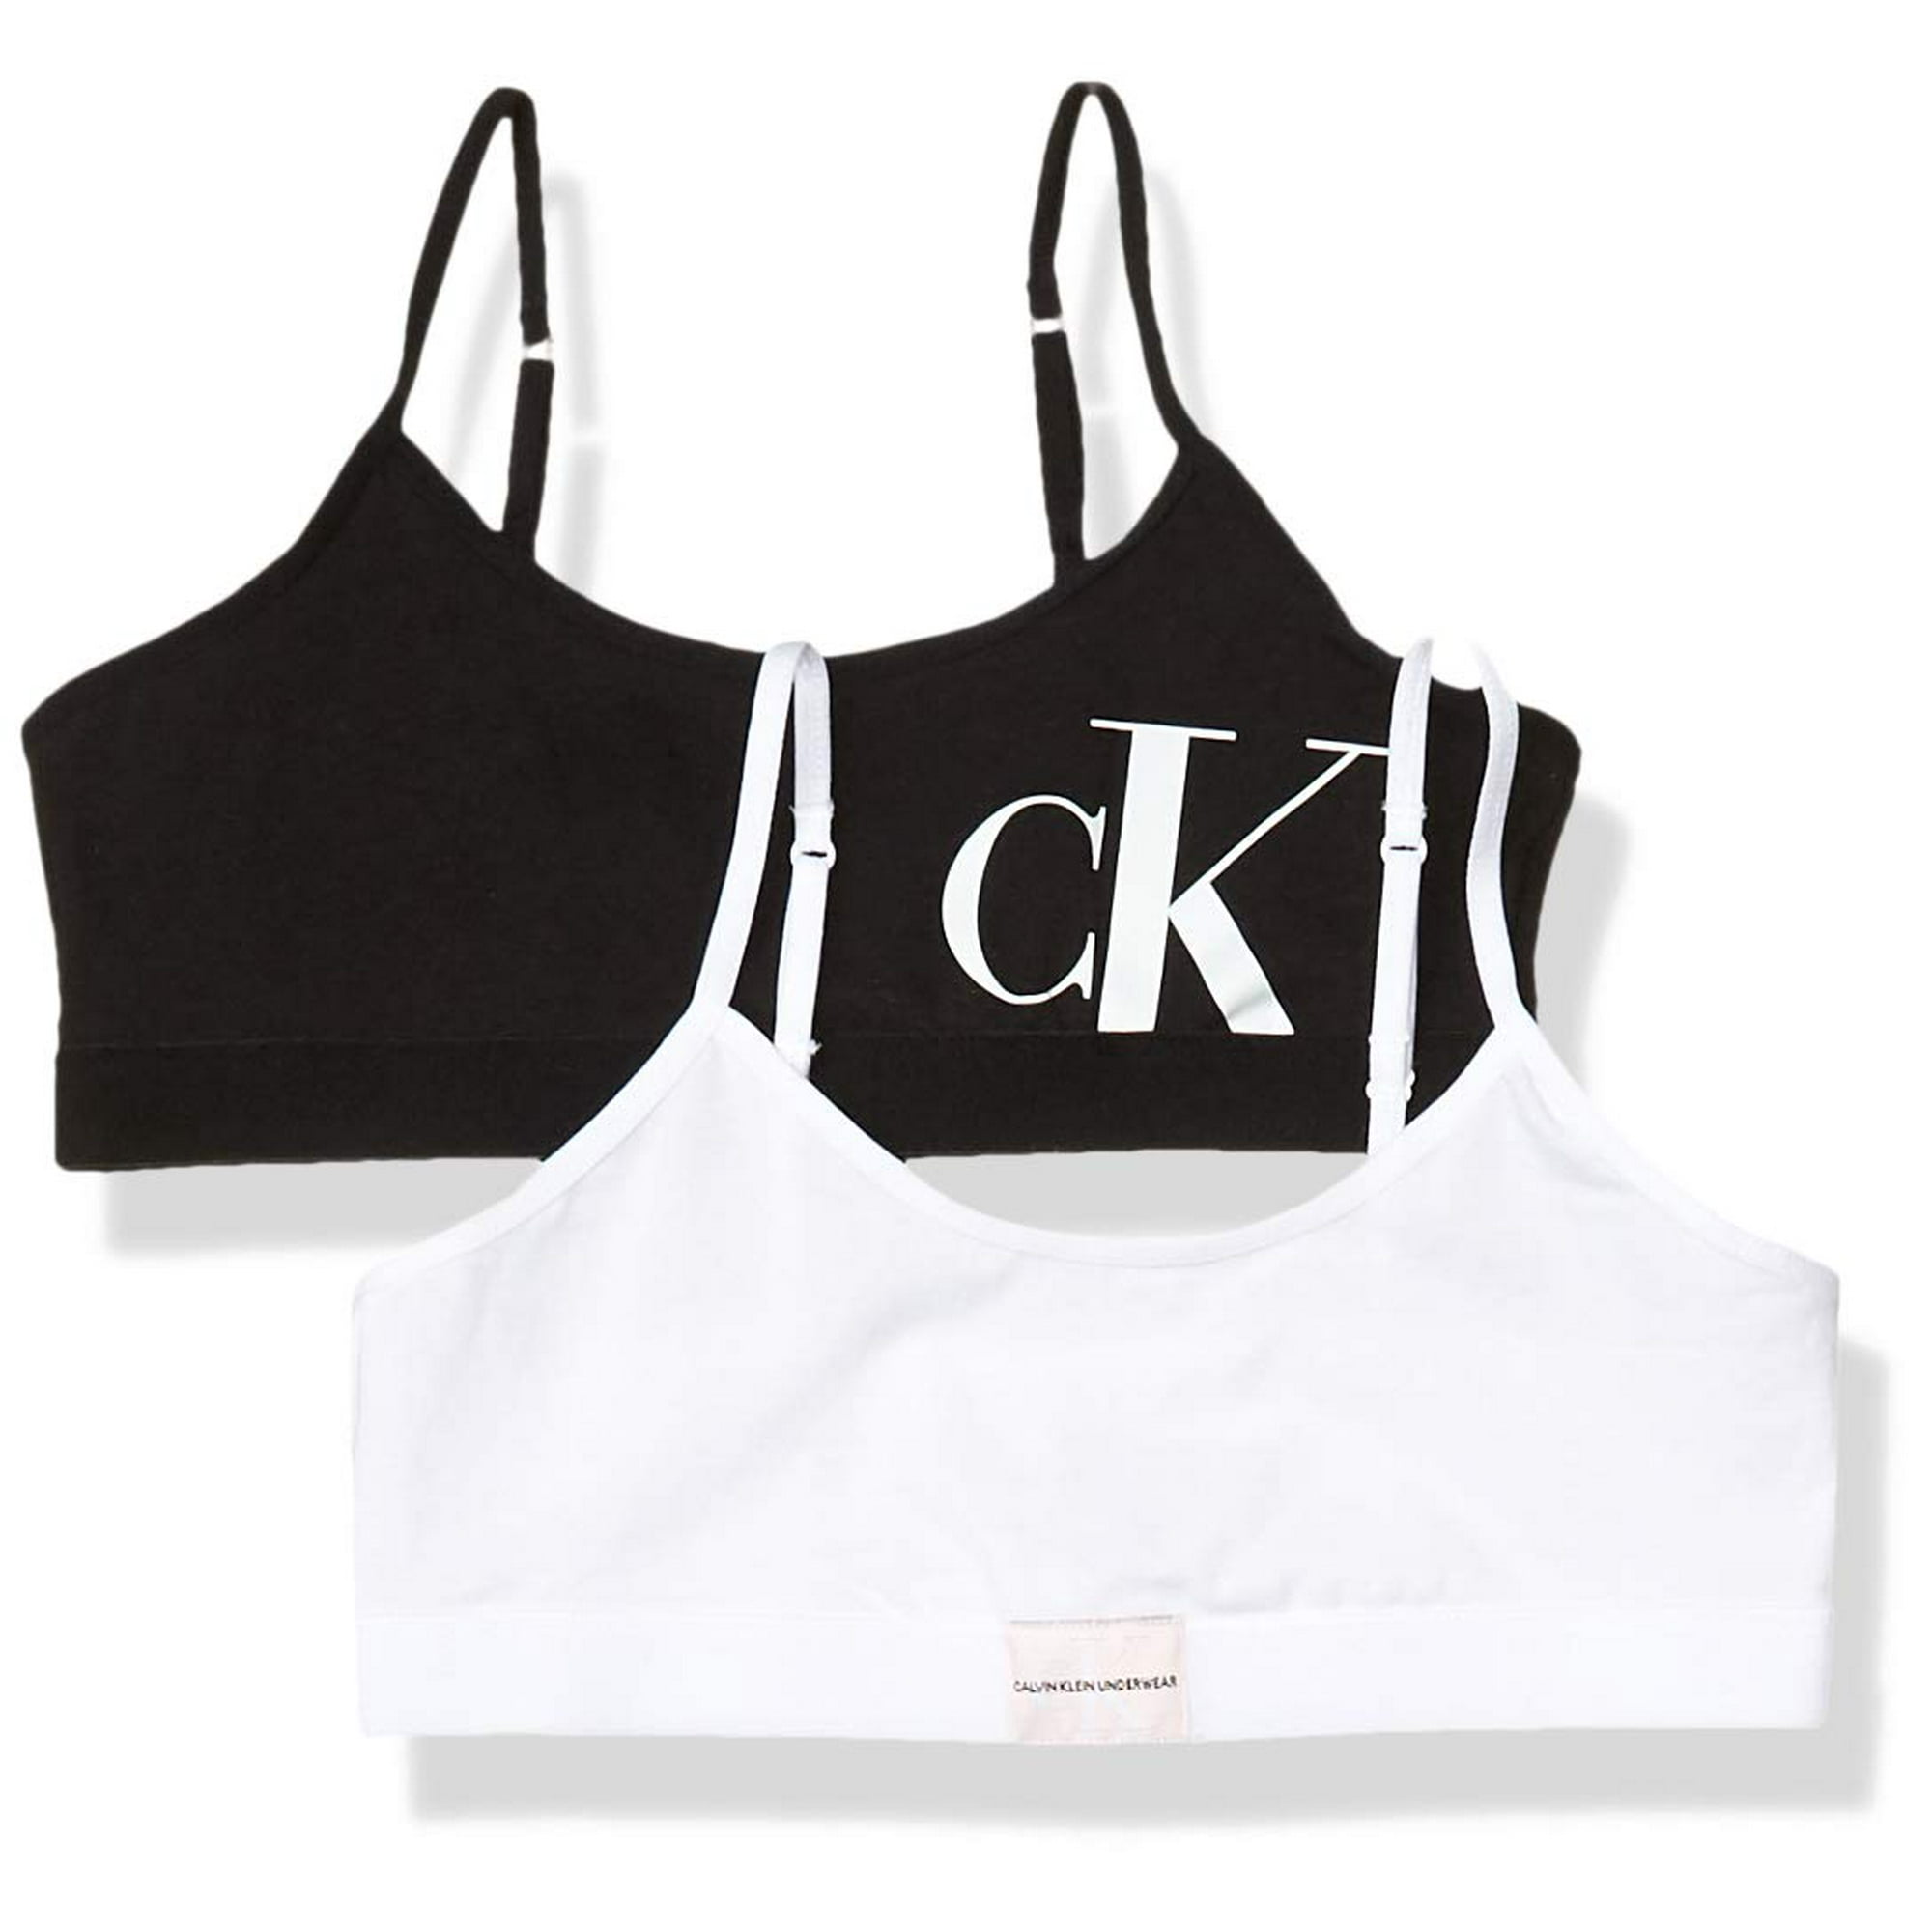 Calvin Klein Girls Black White Cotton Bralettes (2 Pack), 53% OFF